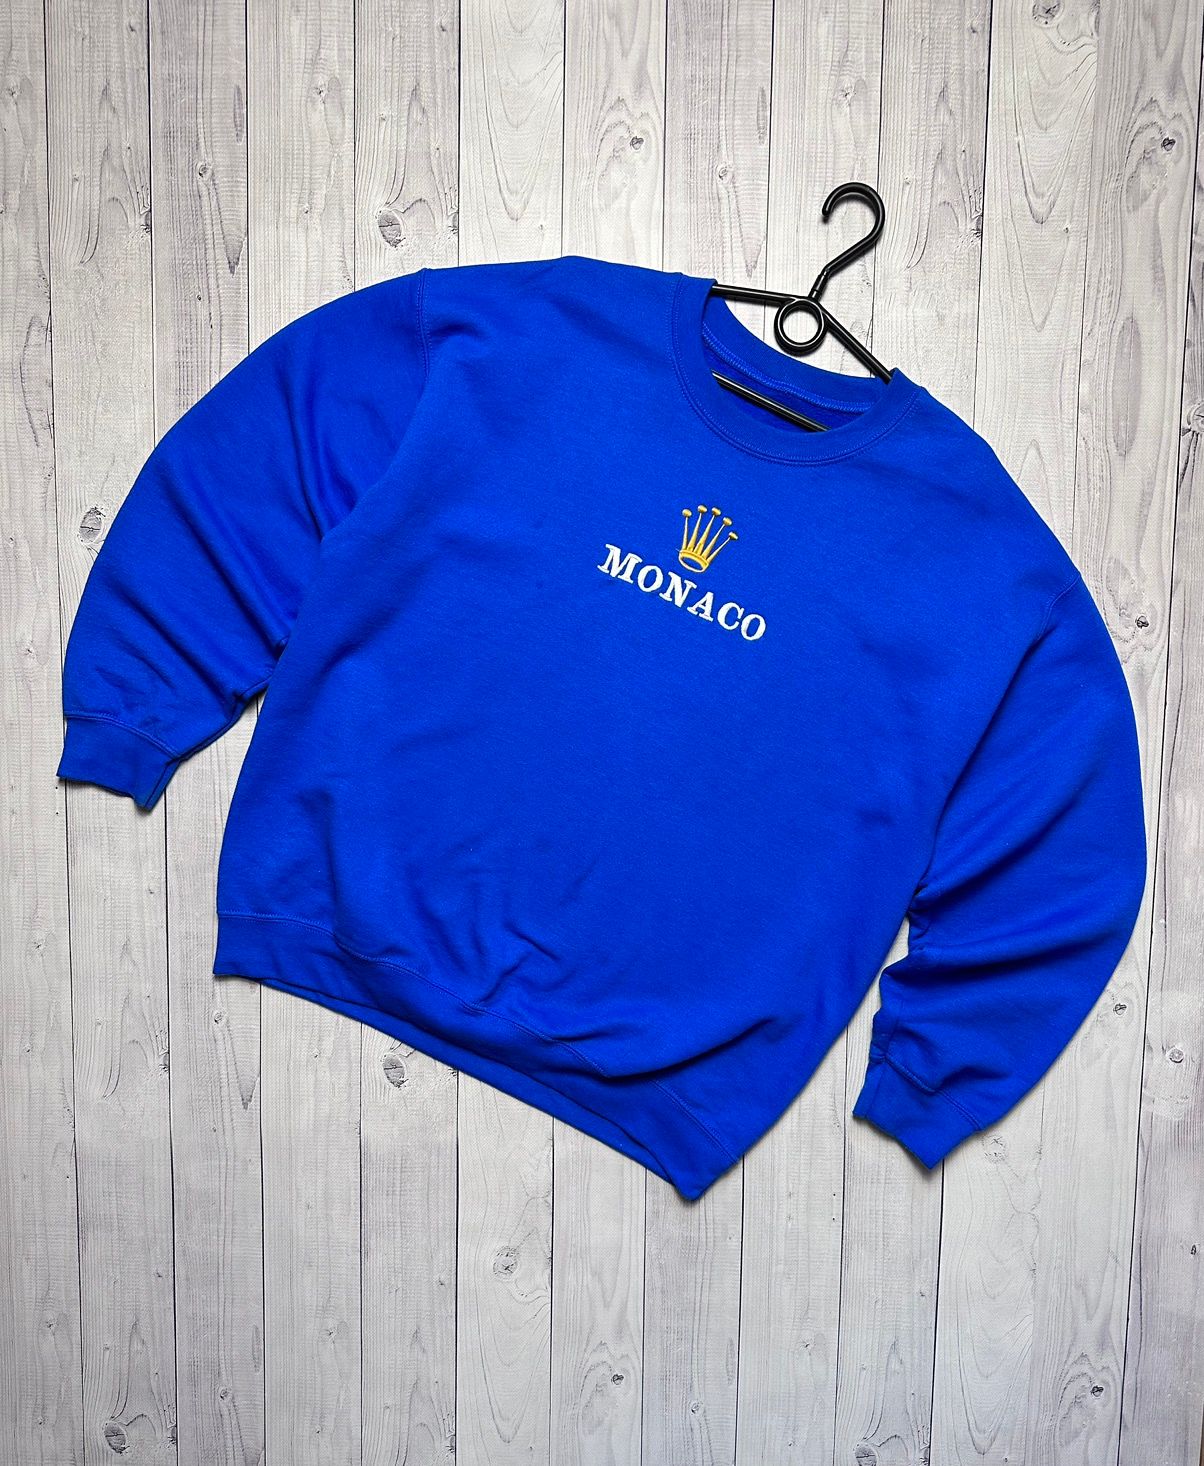 Vintage Vintage Rolex Monaco racing sweatshirt logo size L | Grailed